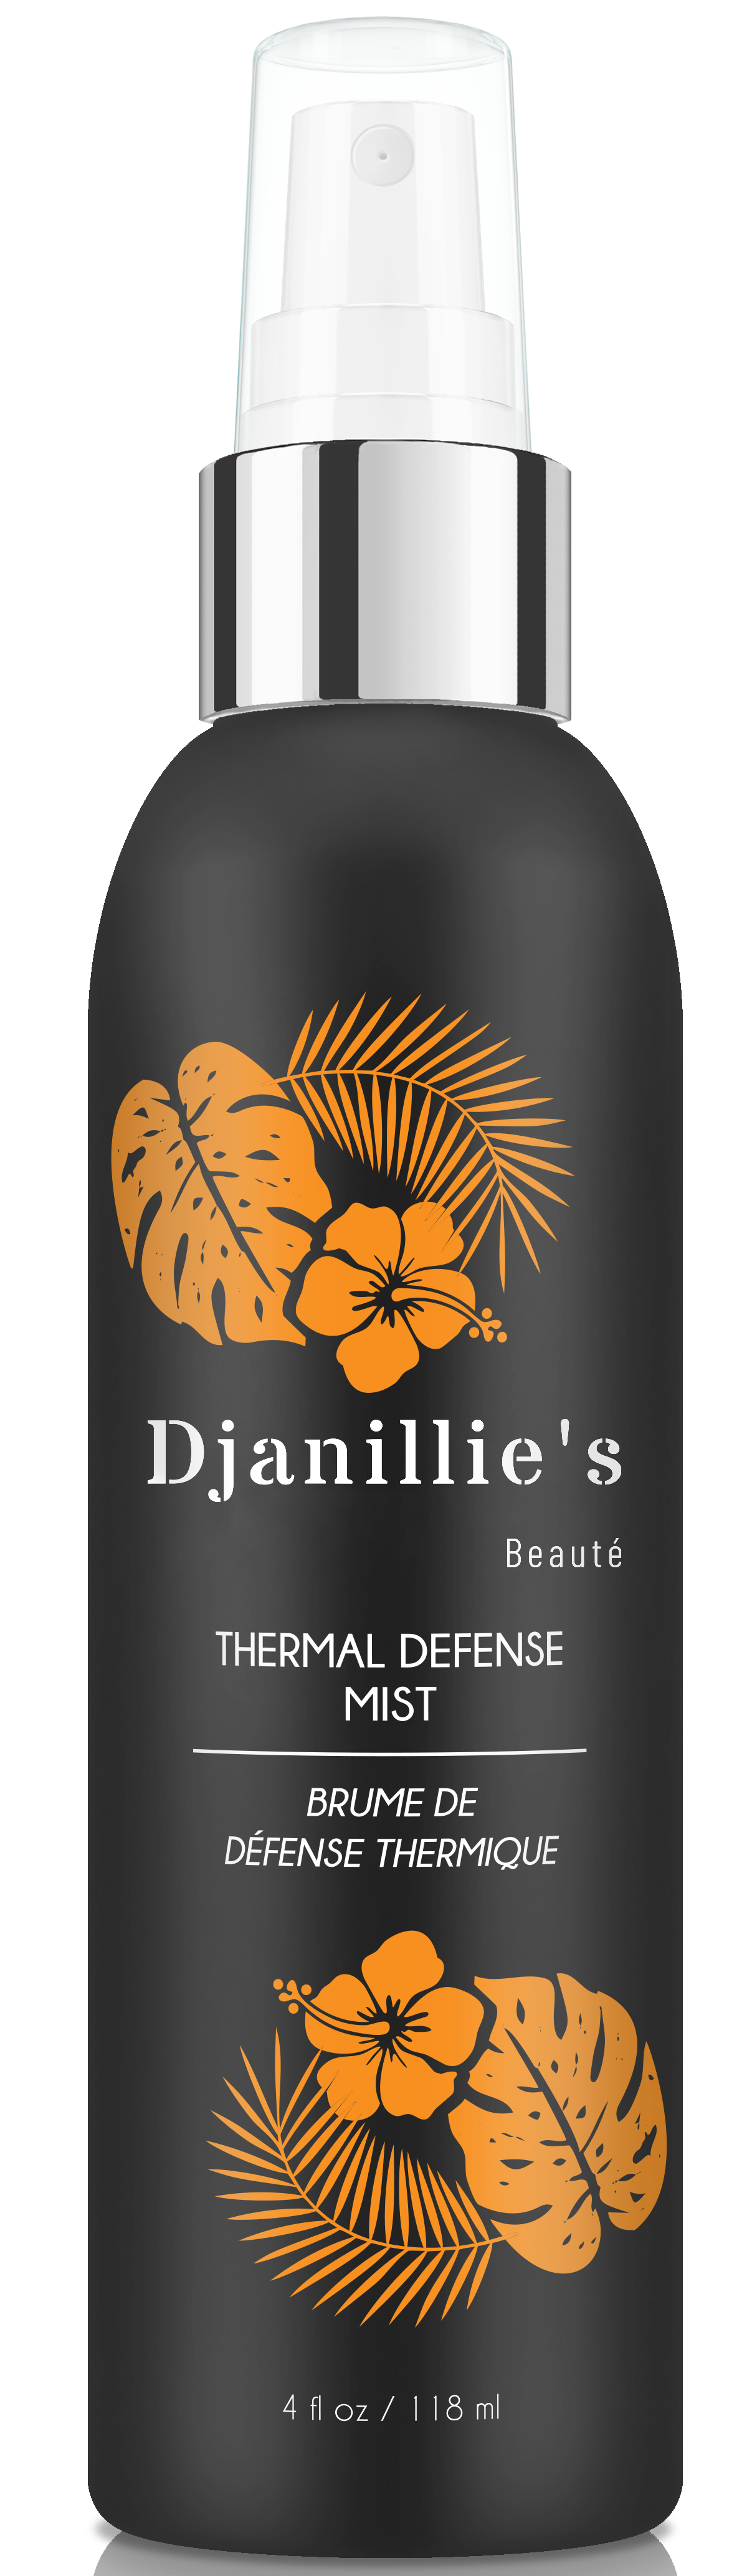 Thermal Defense Mist - Djanillie's Beauté